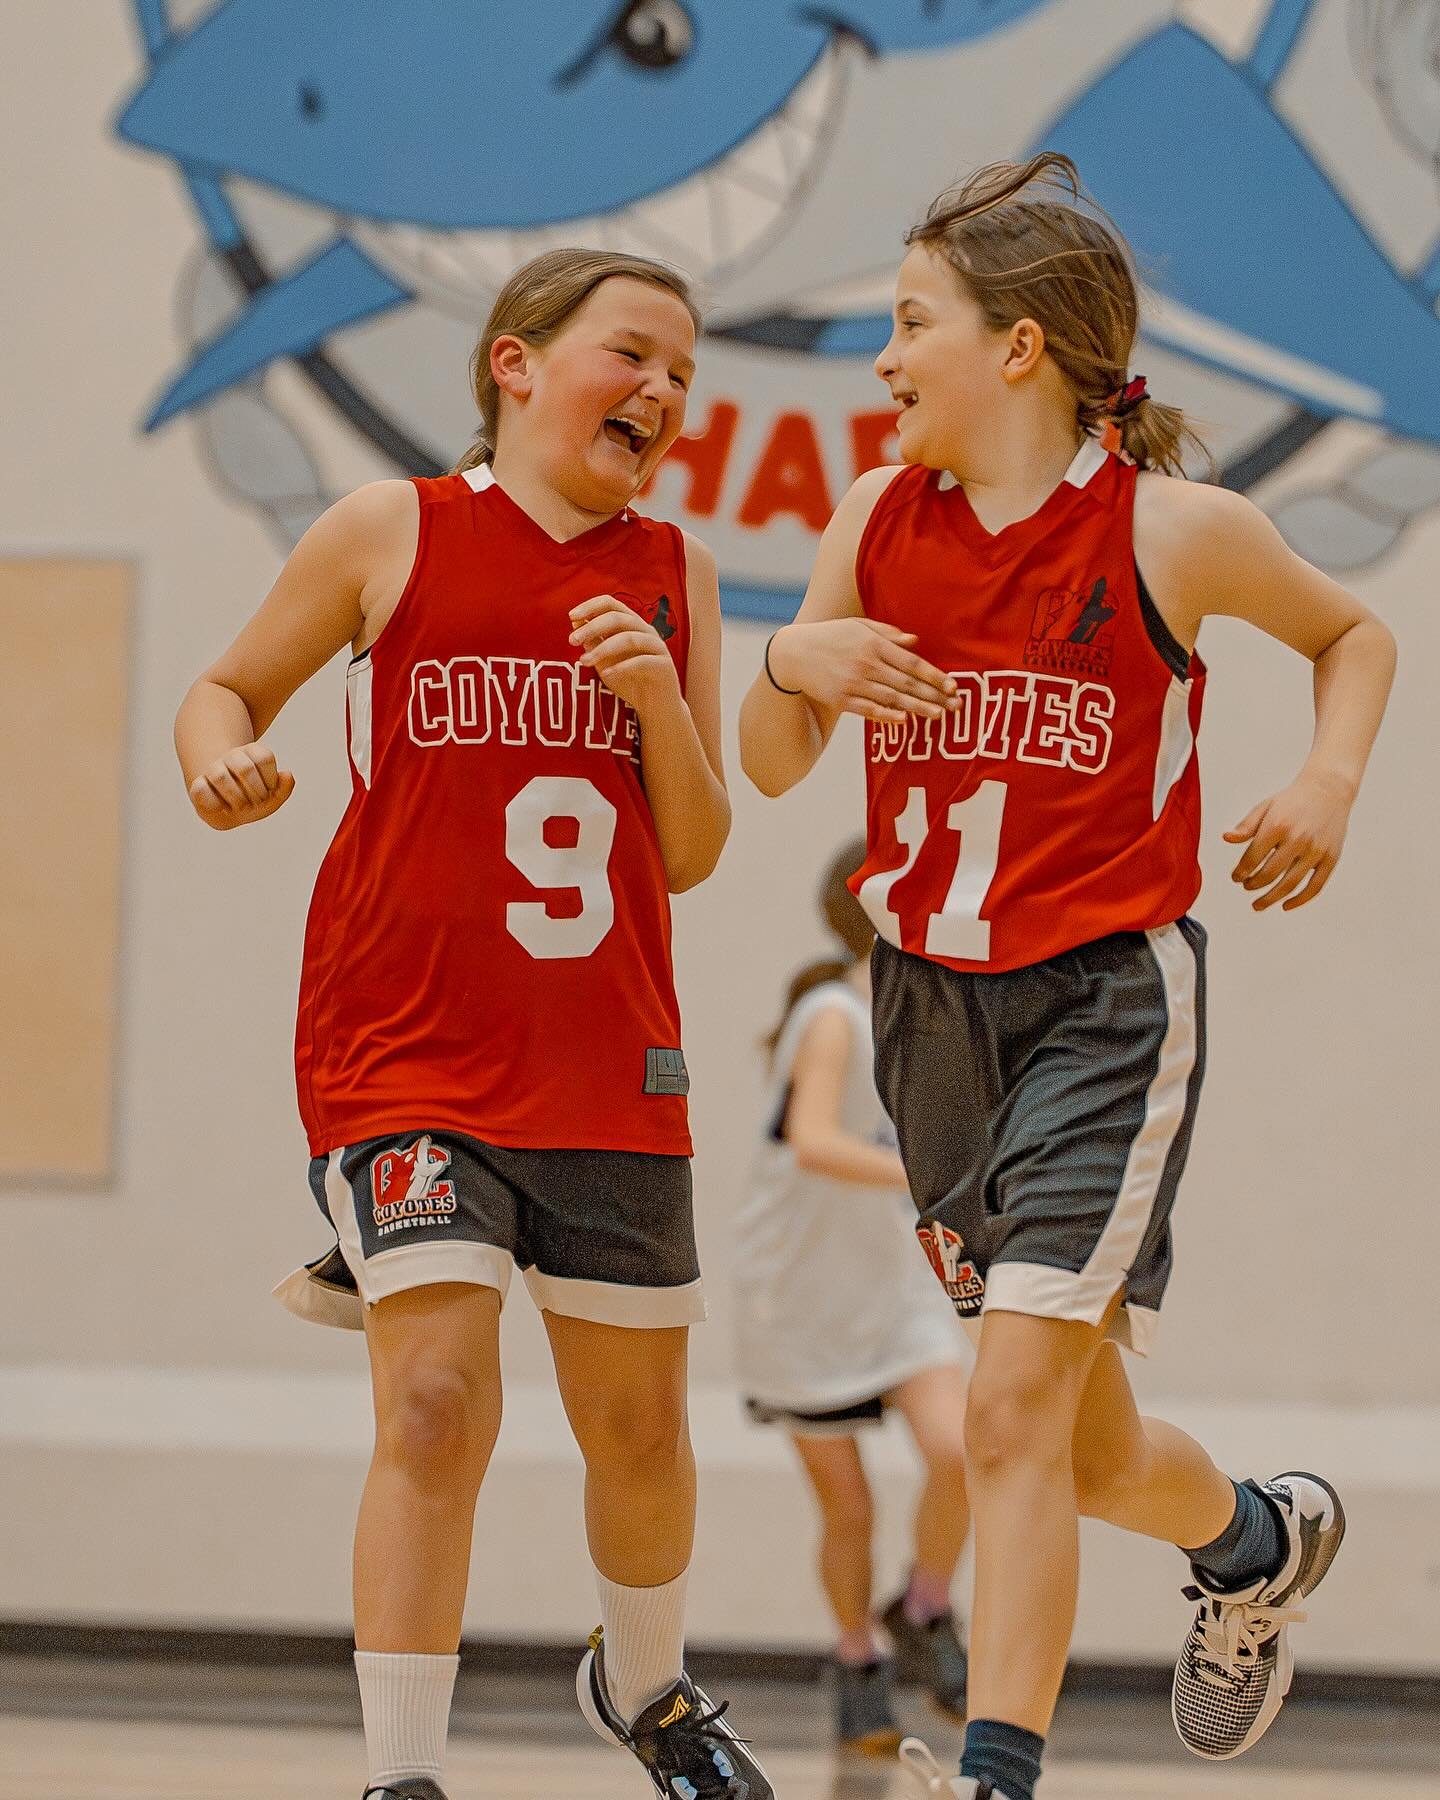 U12 Girls Red team in Penticton 

📸 @itsraidenphotography 

#basketball #team #games #penticton #u12girls #hustle #juniorcoyotesbasketball